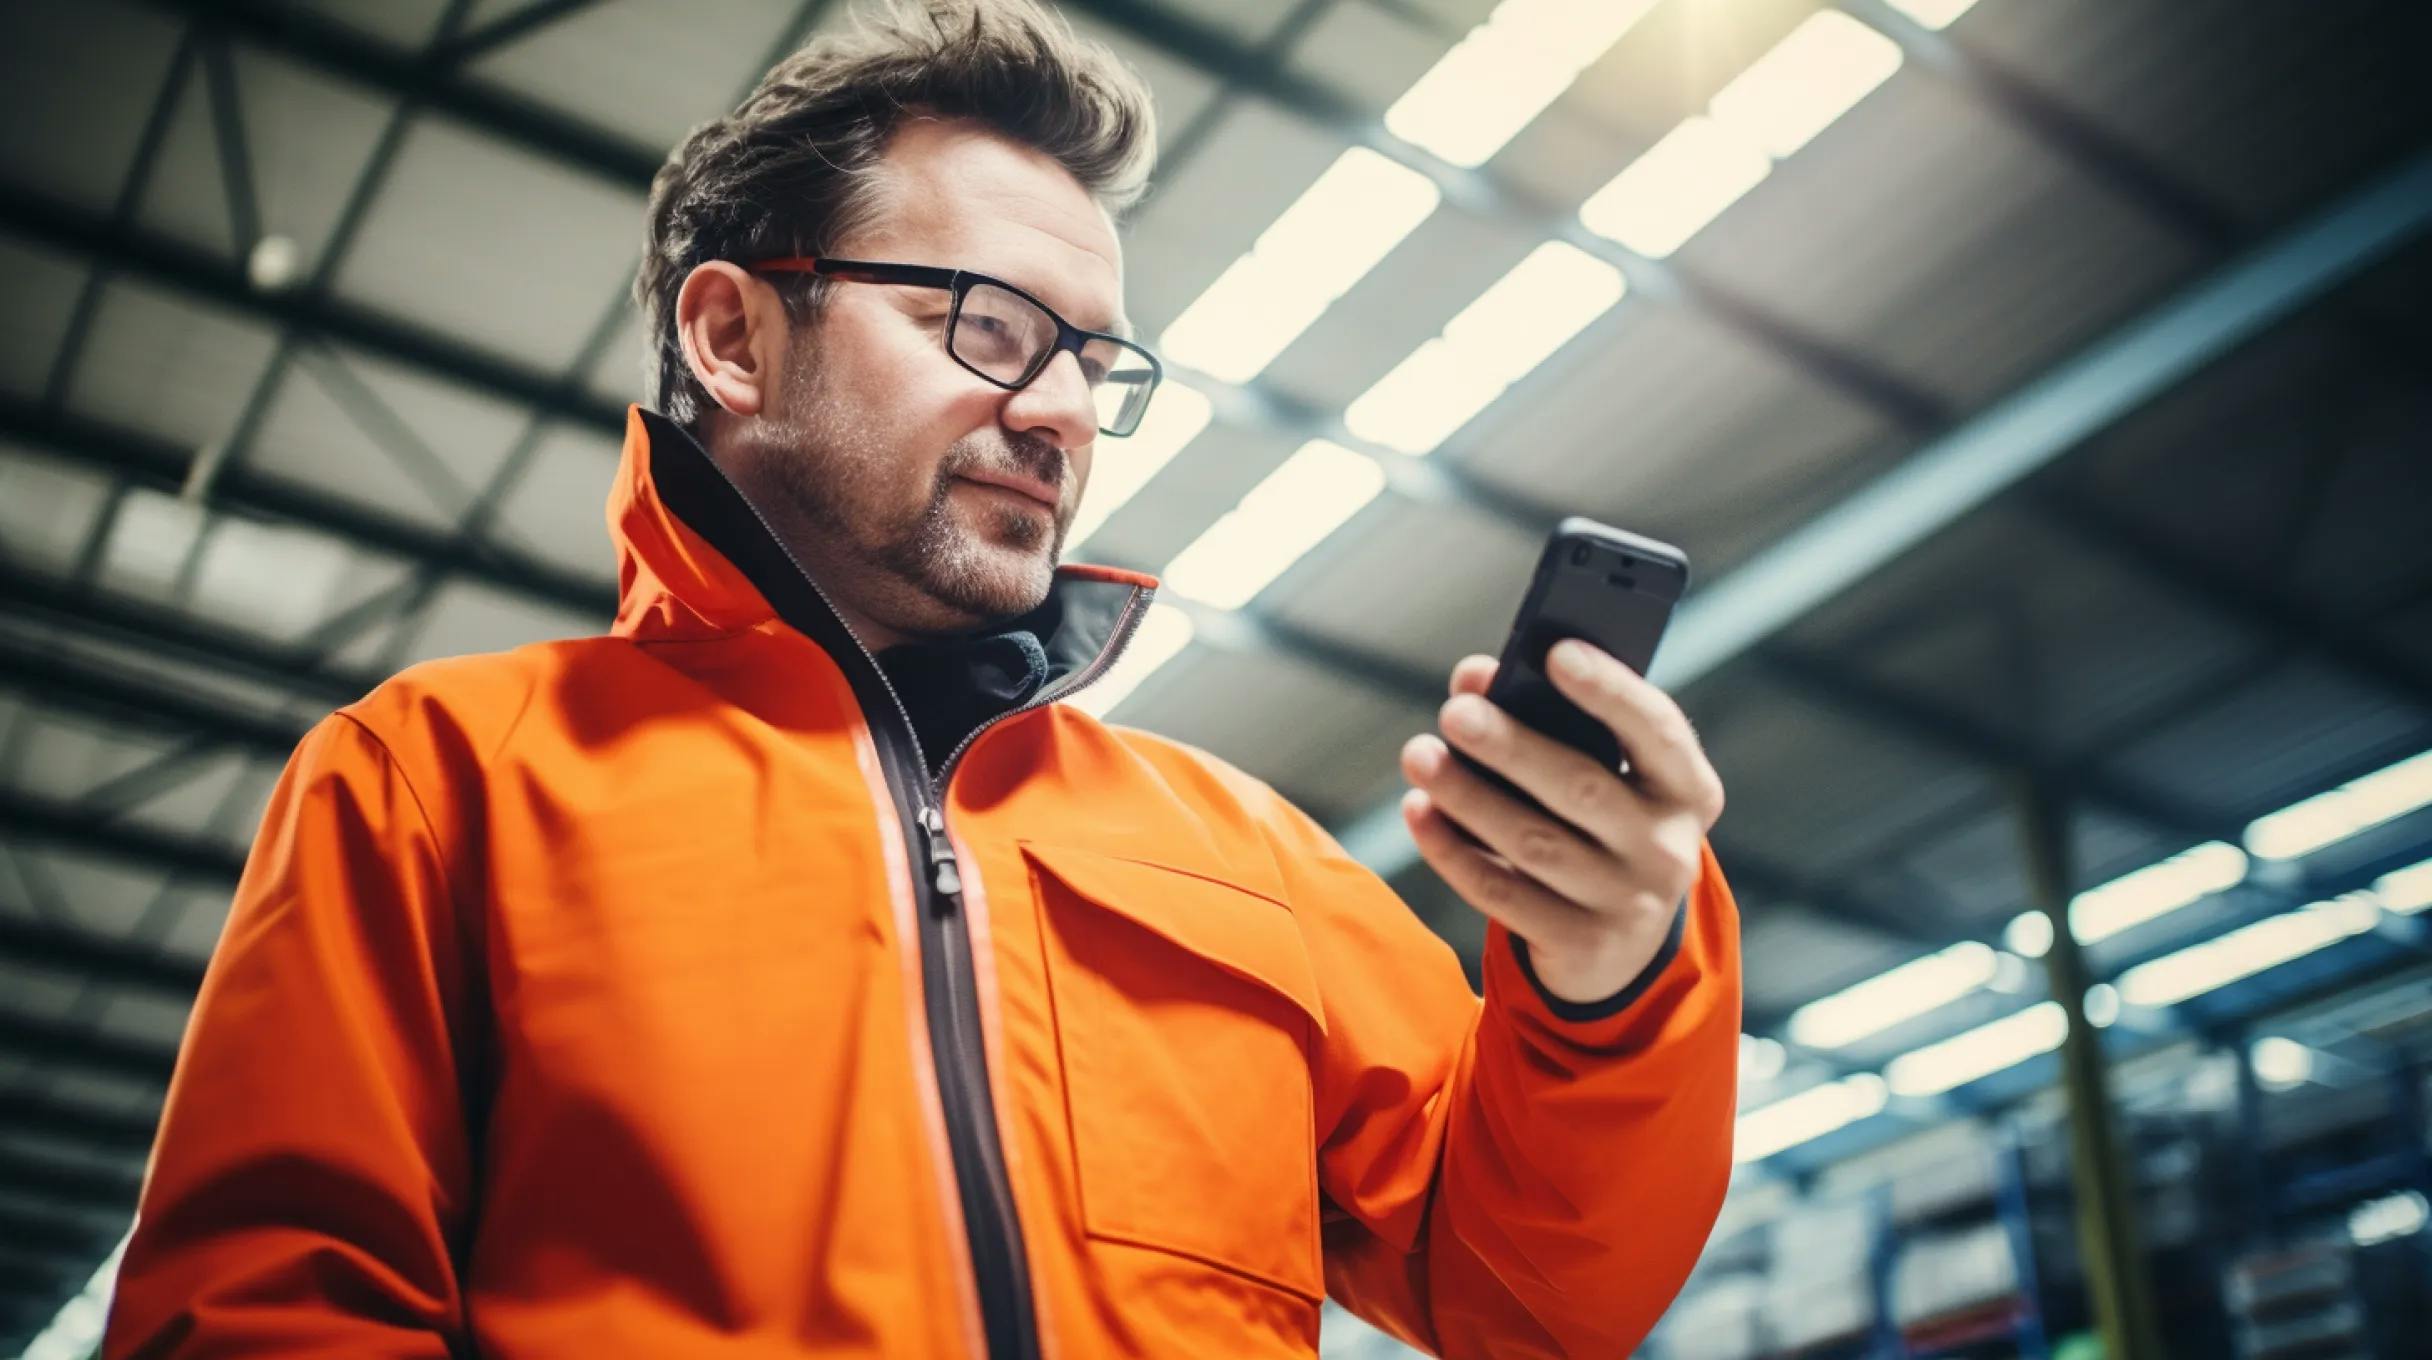 A man in an orange jacket using phone